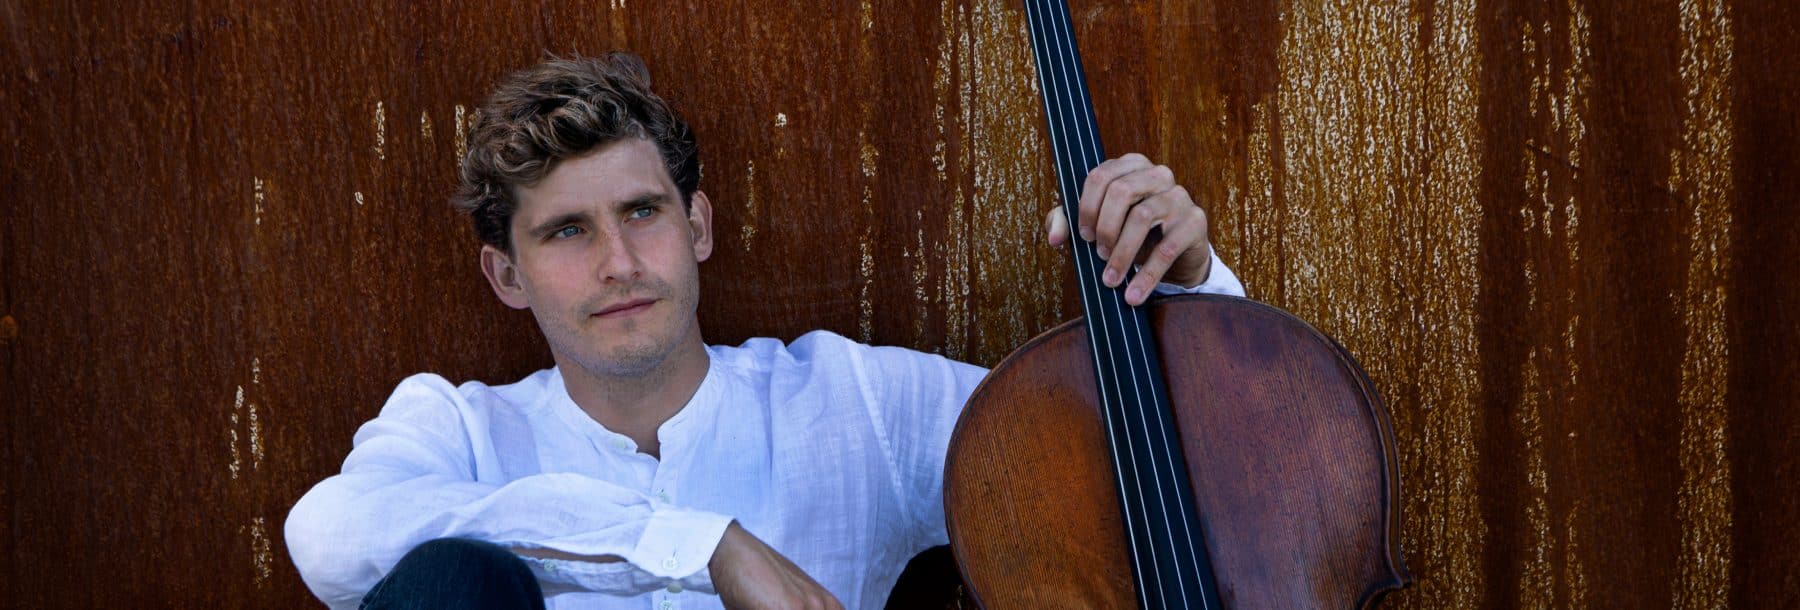 Andreas Brantelid, cellist